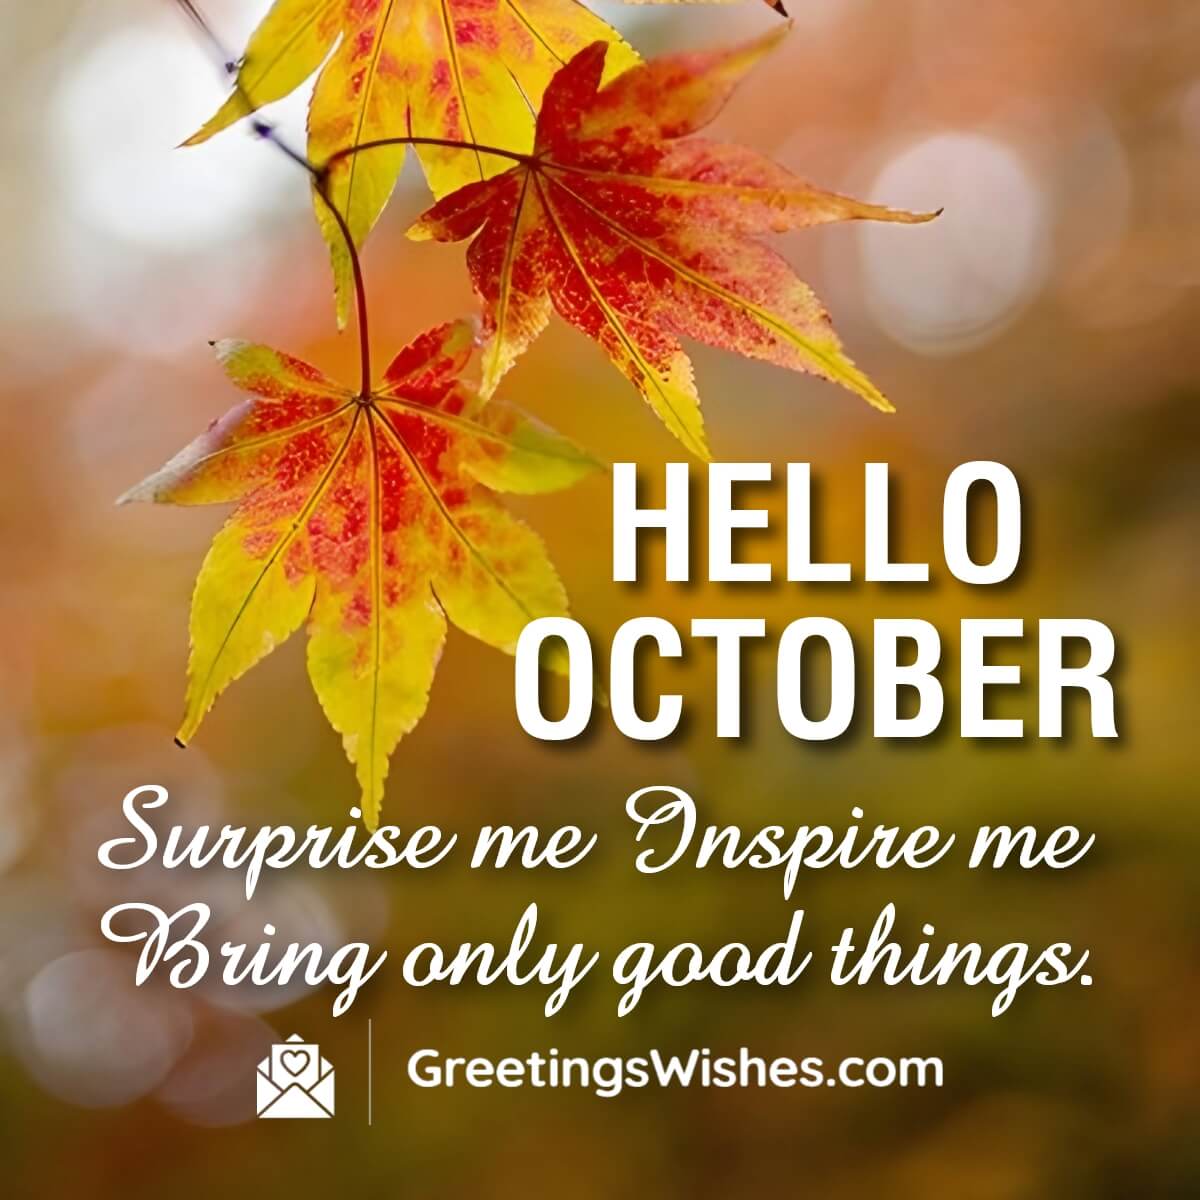 Hello October Status Image